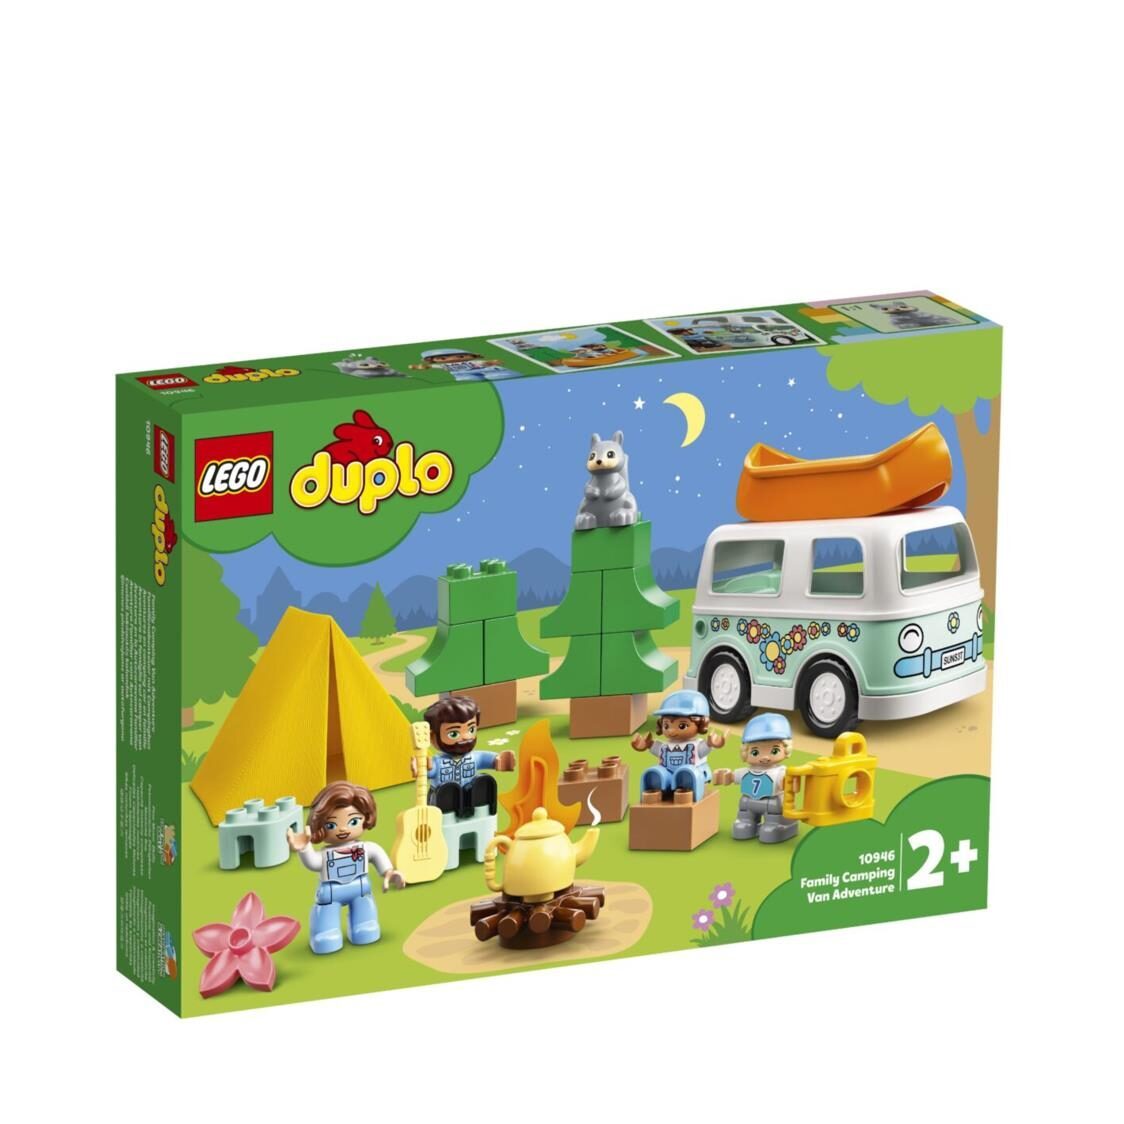 LEGO DUPLO Town - Family Camping Van Adventure 10946